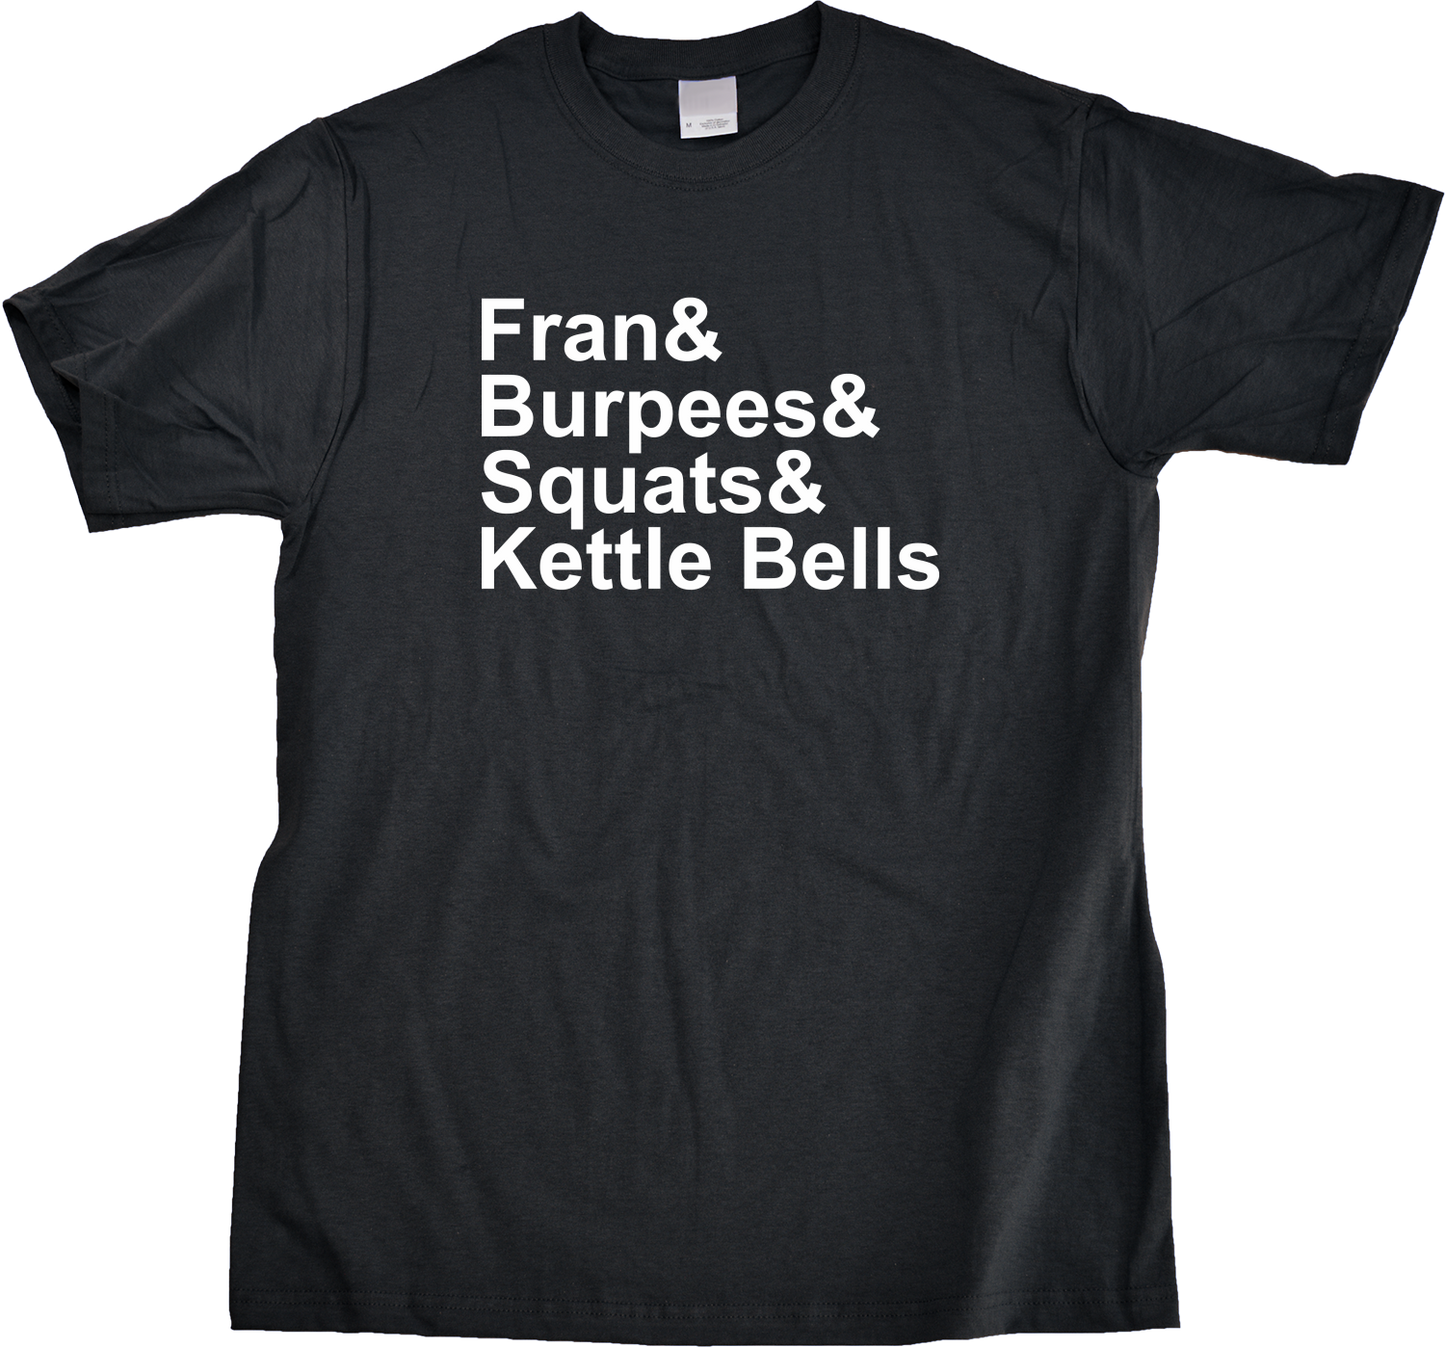 Unisex Black Fran & Burpees & Squats & Kettle Bells - Fitness Humor Pride T-shirt